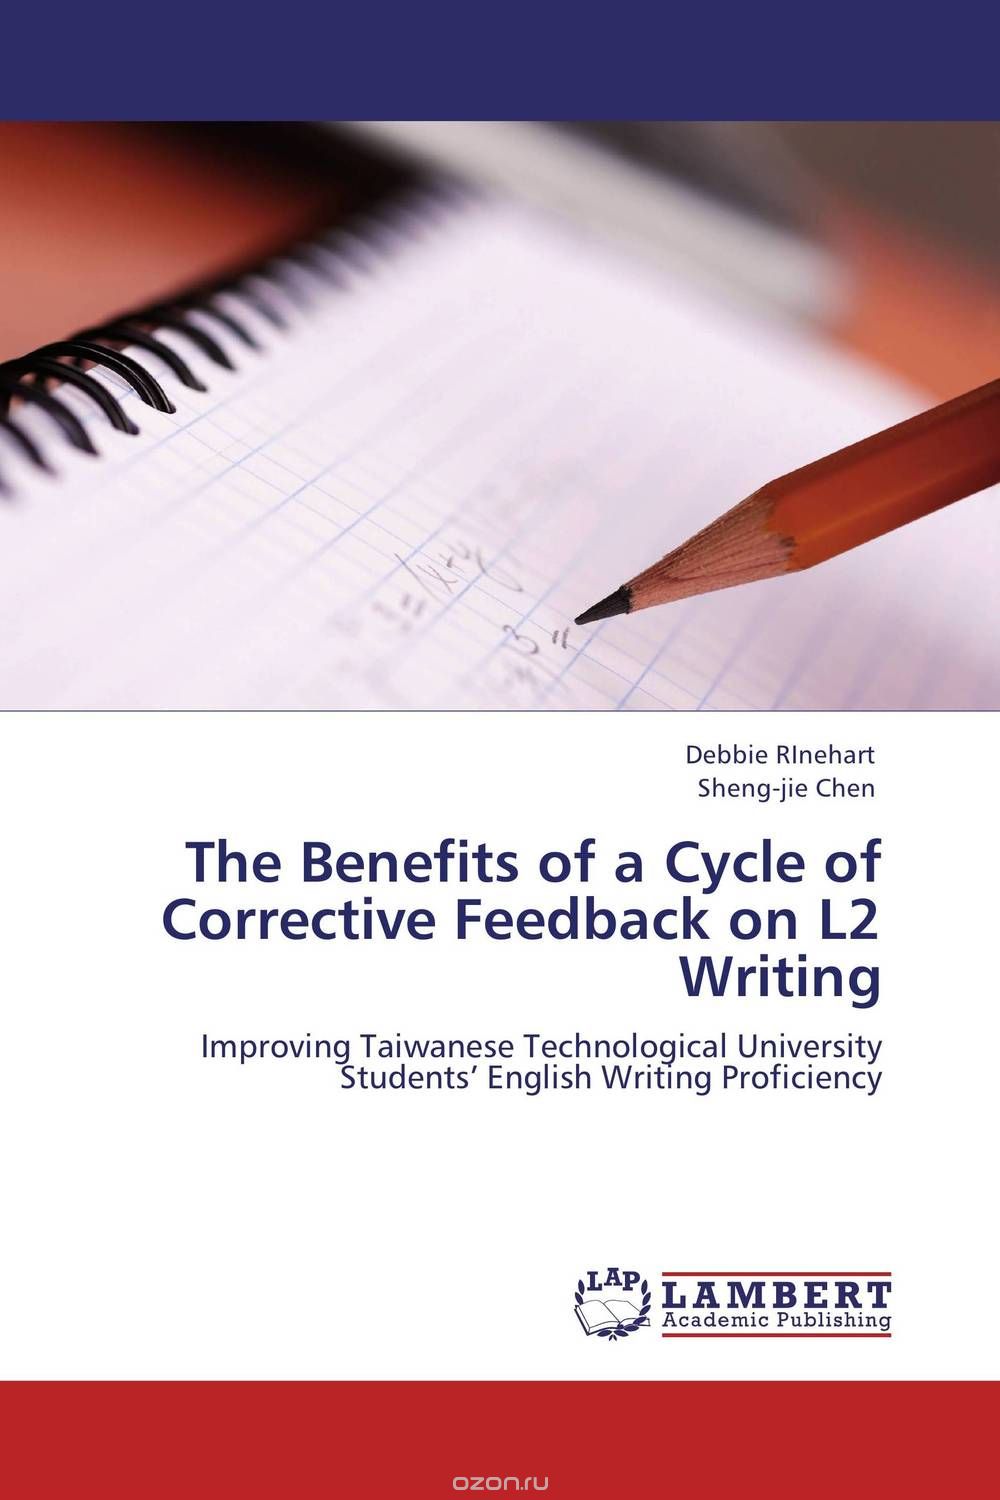 Скачать книгу "The Benefits of a Cycle of Corrective Feedback on L2 Writing"